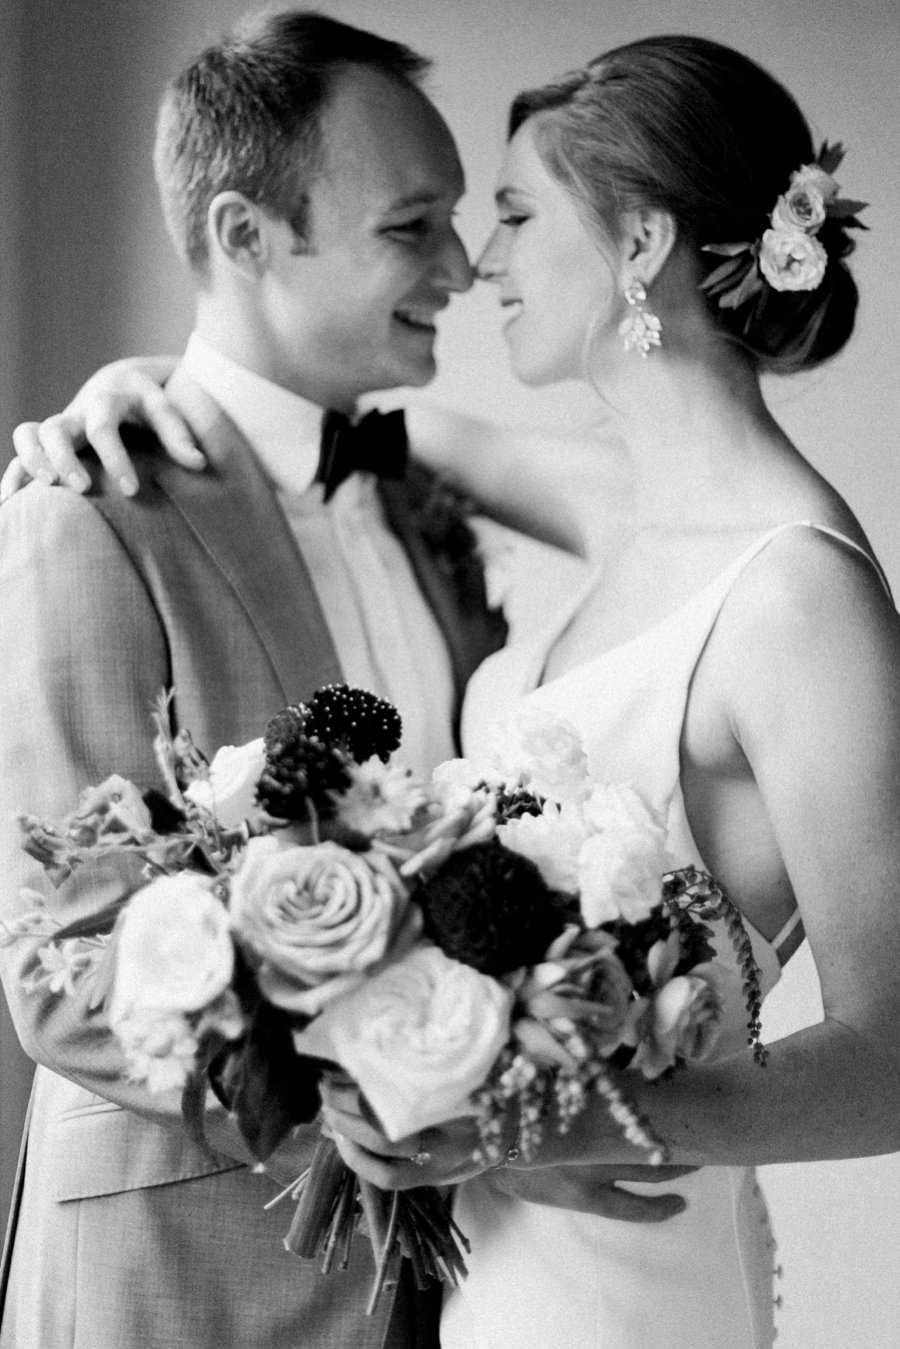 A Burgundy & Blush Elegant Rustic Colorado Wedding via TheELD.com